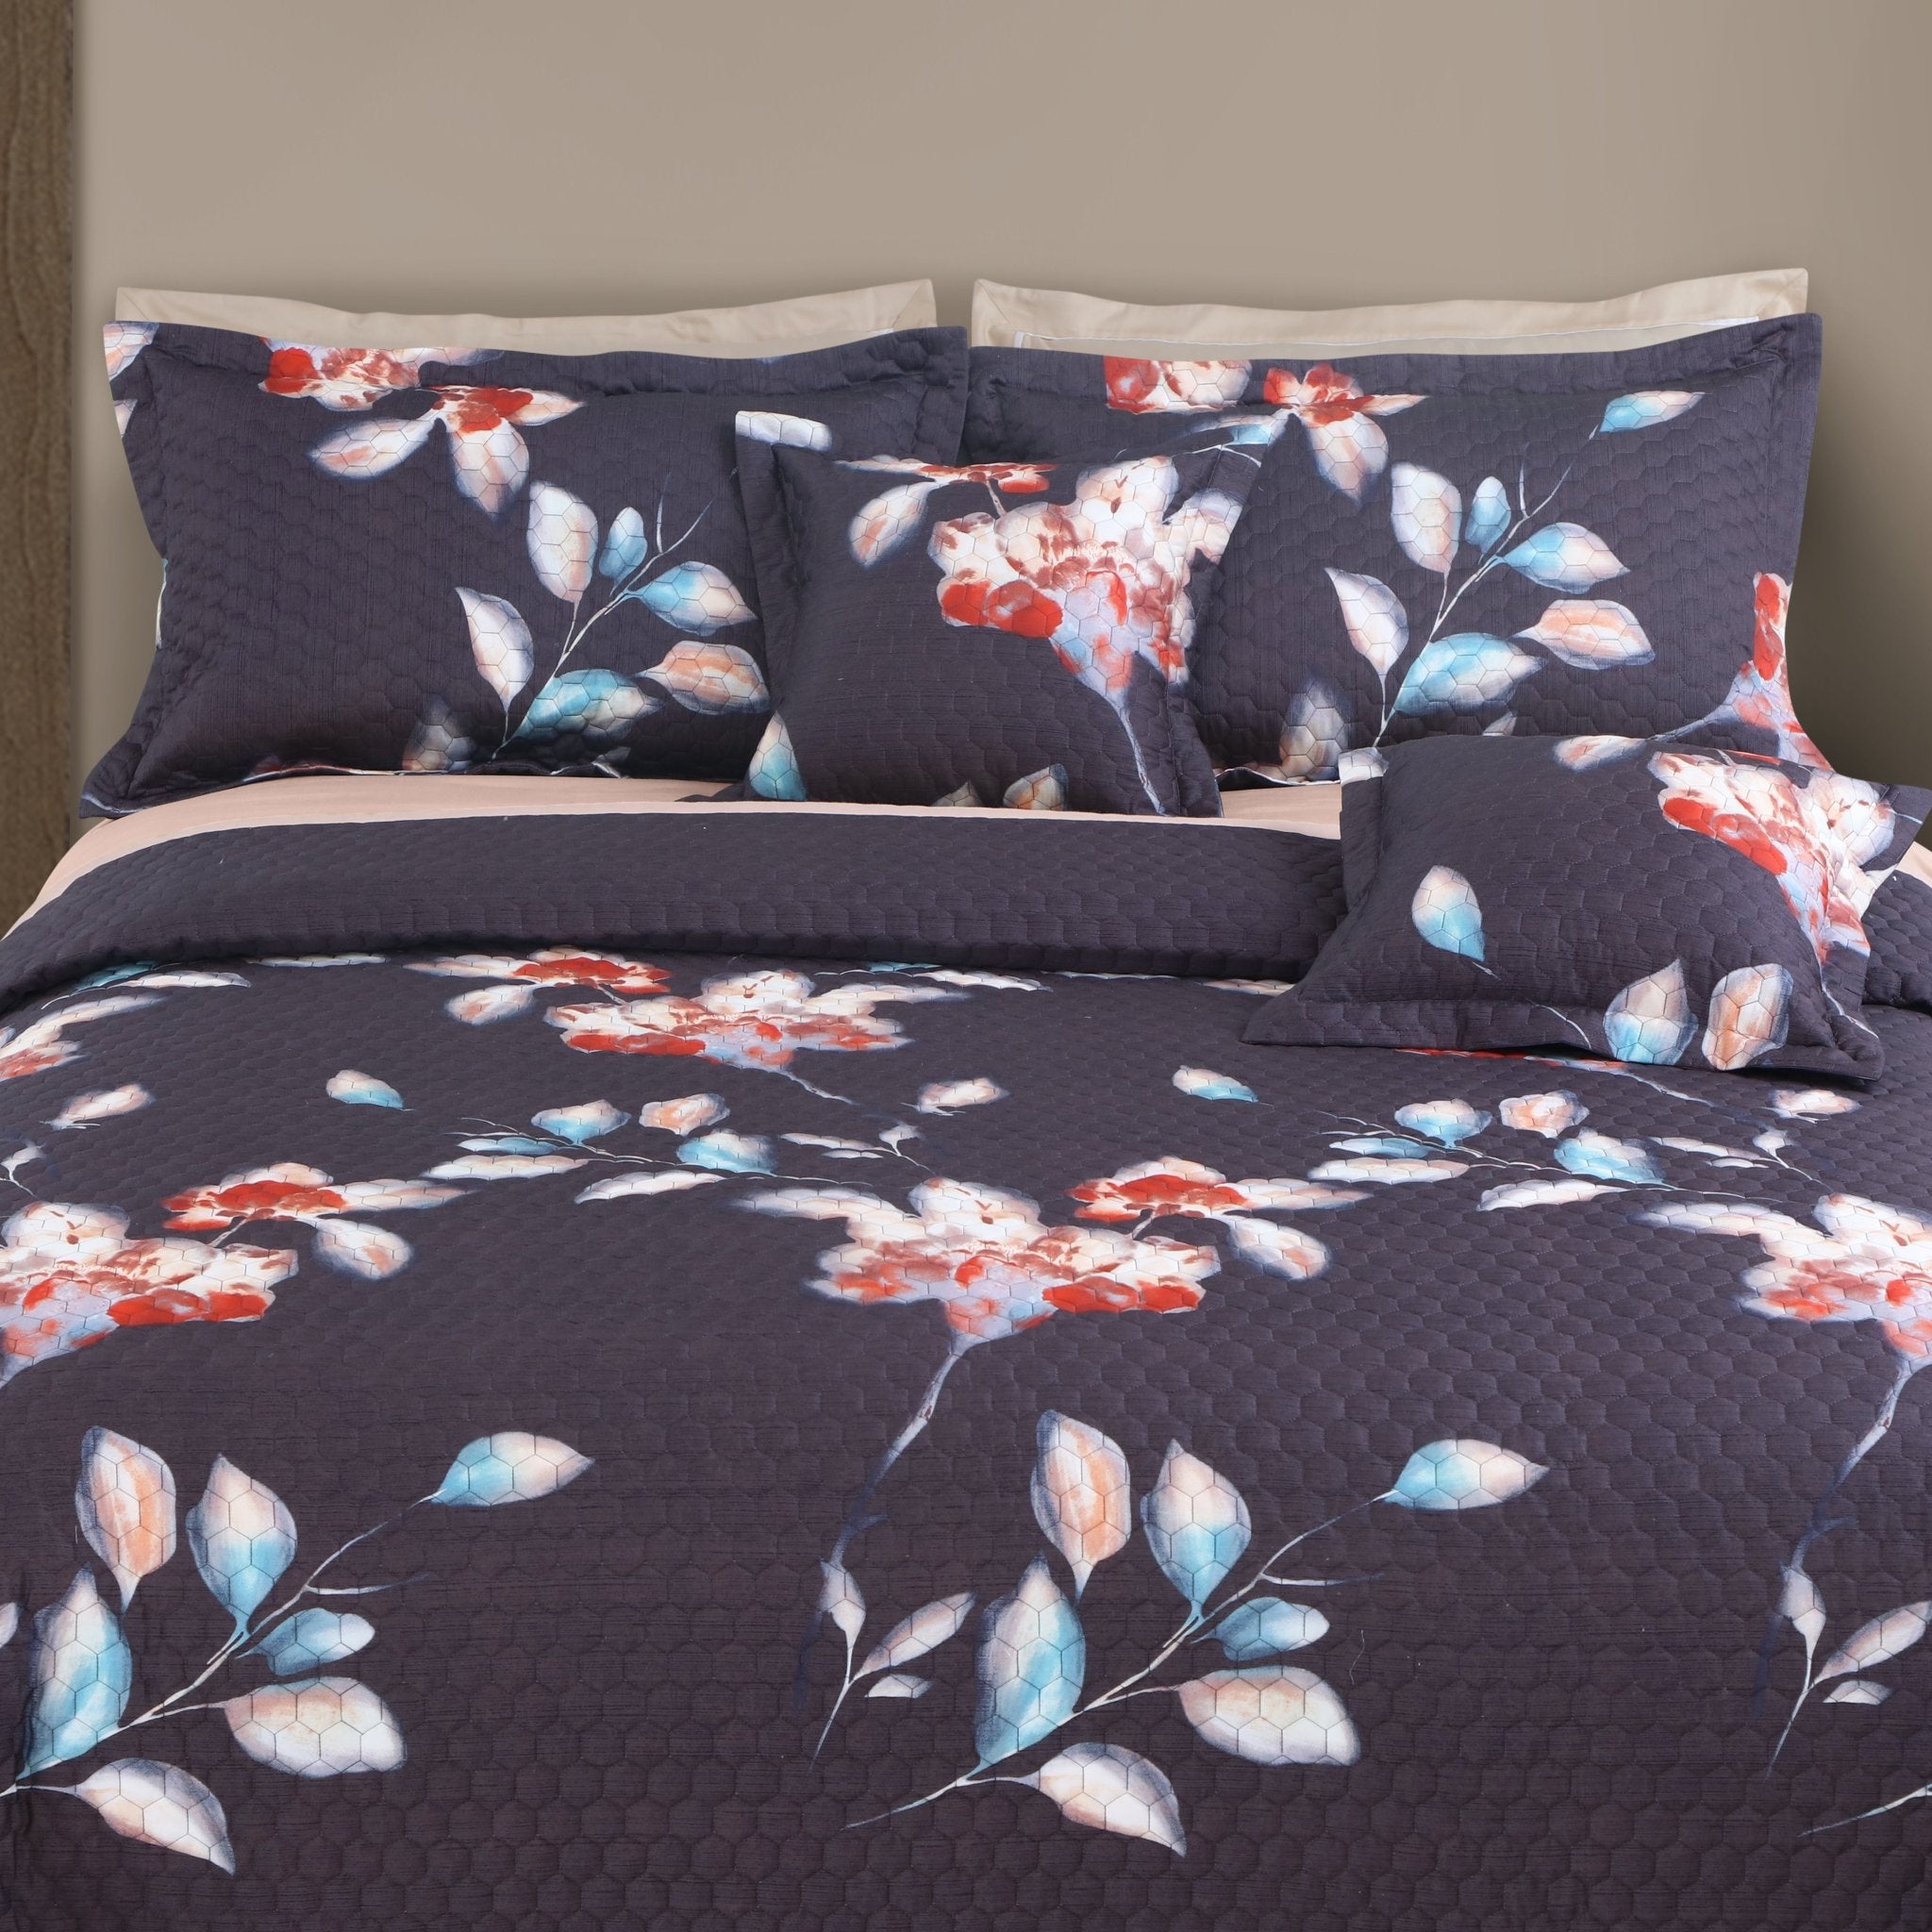 Malako Royale 100% Cotton Deep Grey Botanical King Size 5 Piece Quilted Bedspread Set - MALAKO